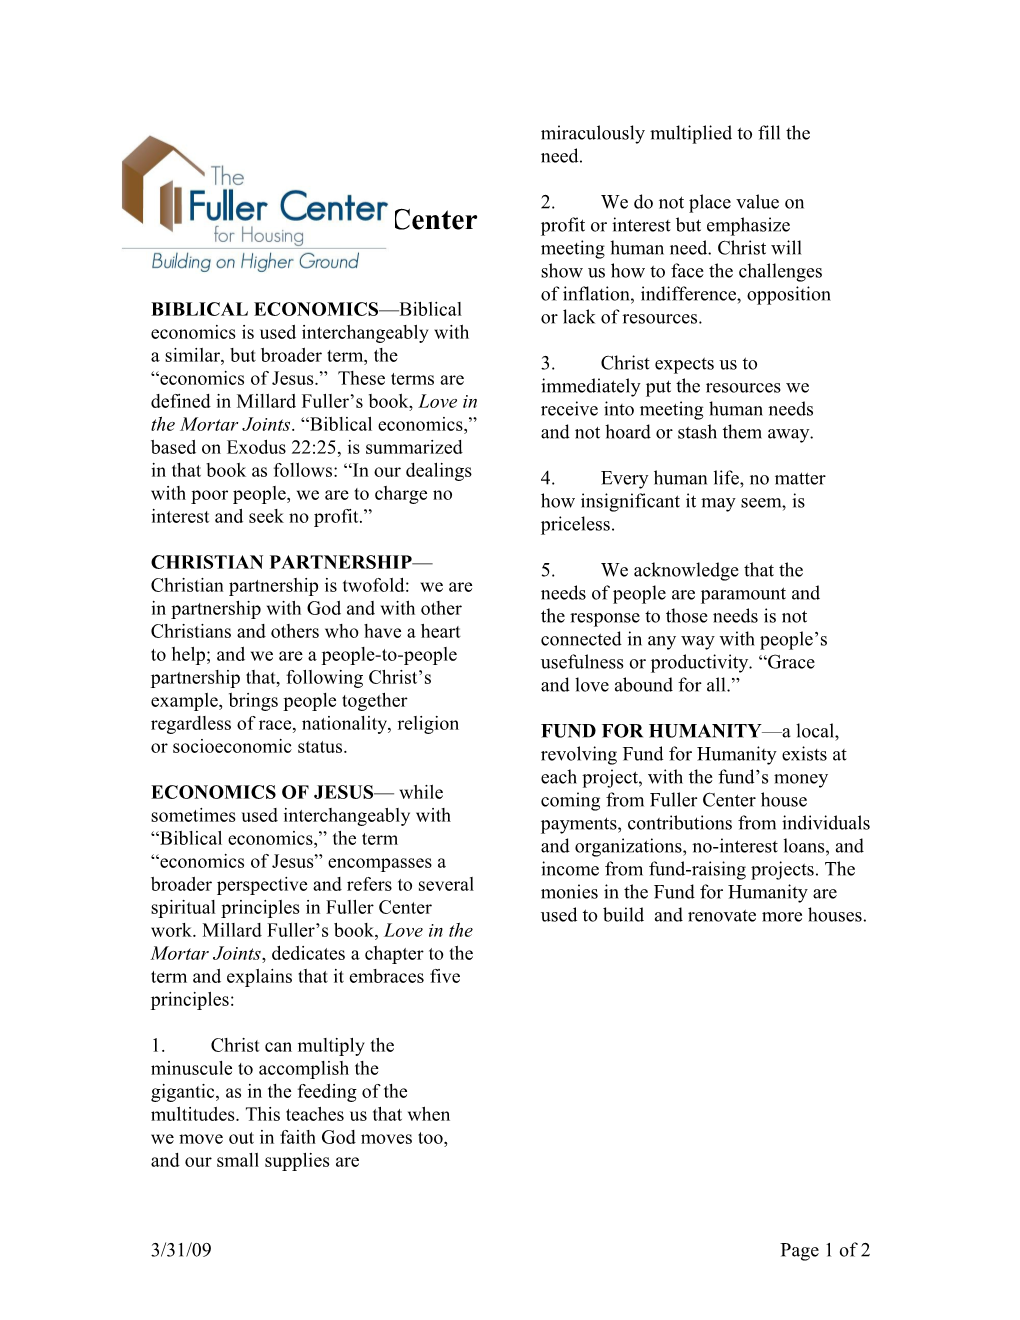 Fuller Center Terms & Concepts